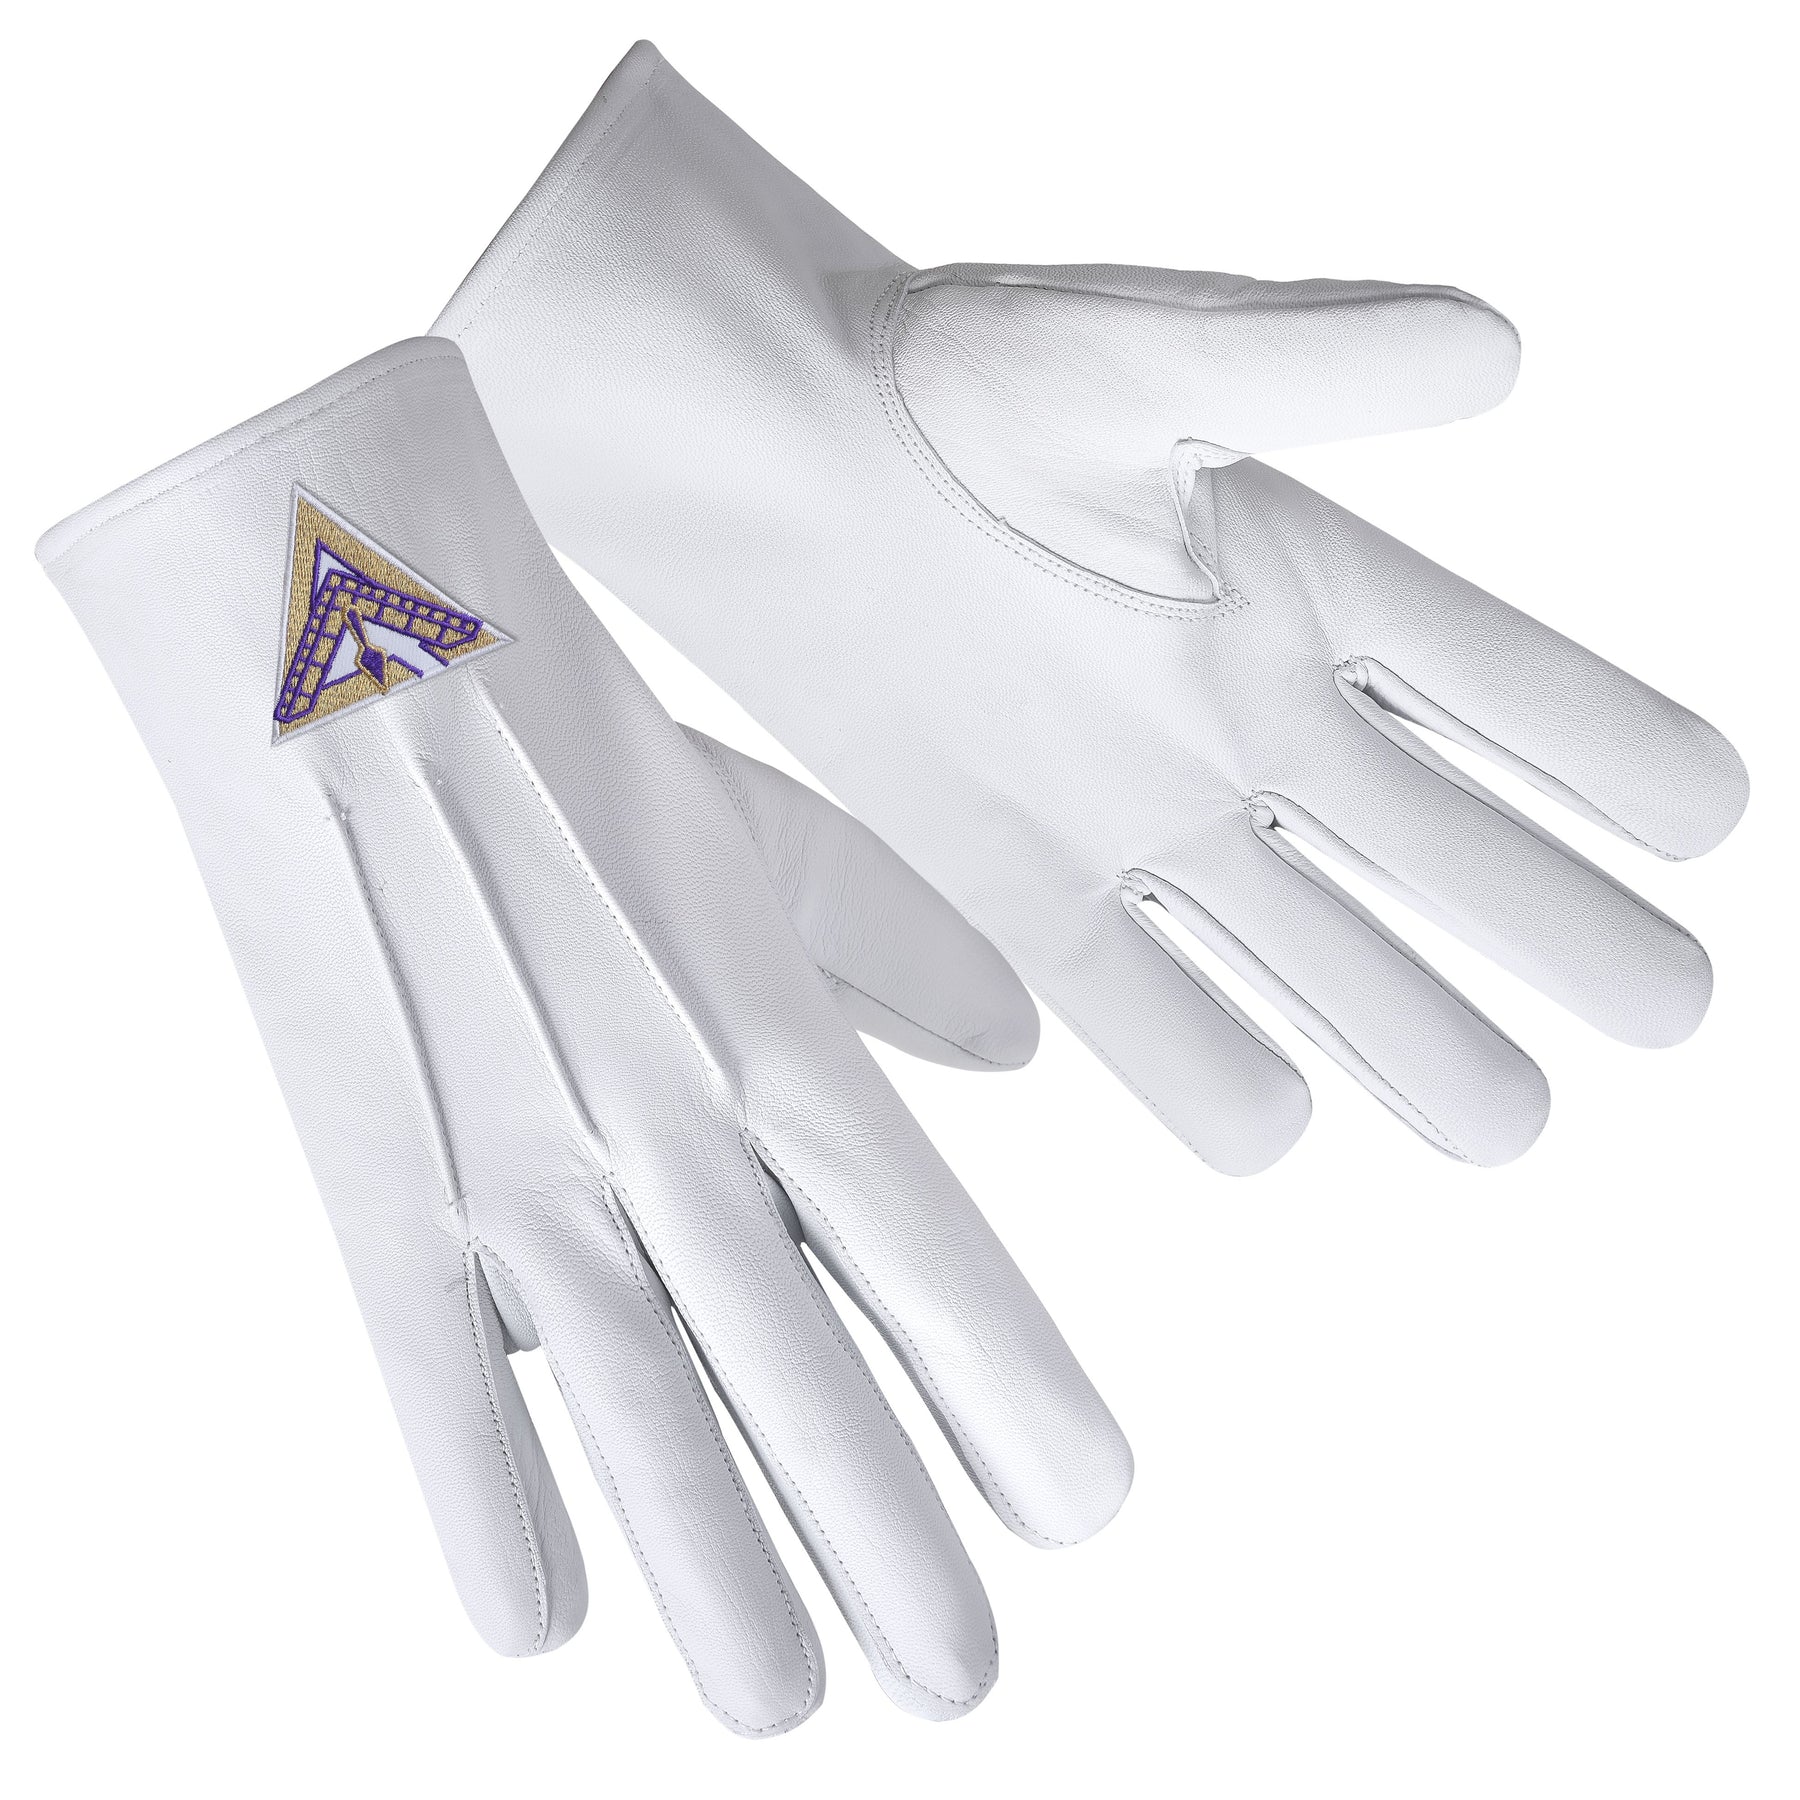 Royal & Select Masters English Regulation Glove - White Leather With Purple & Gold Emblem - Bricks Masons